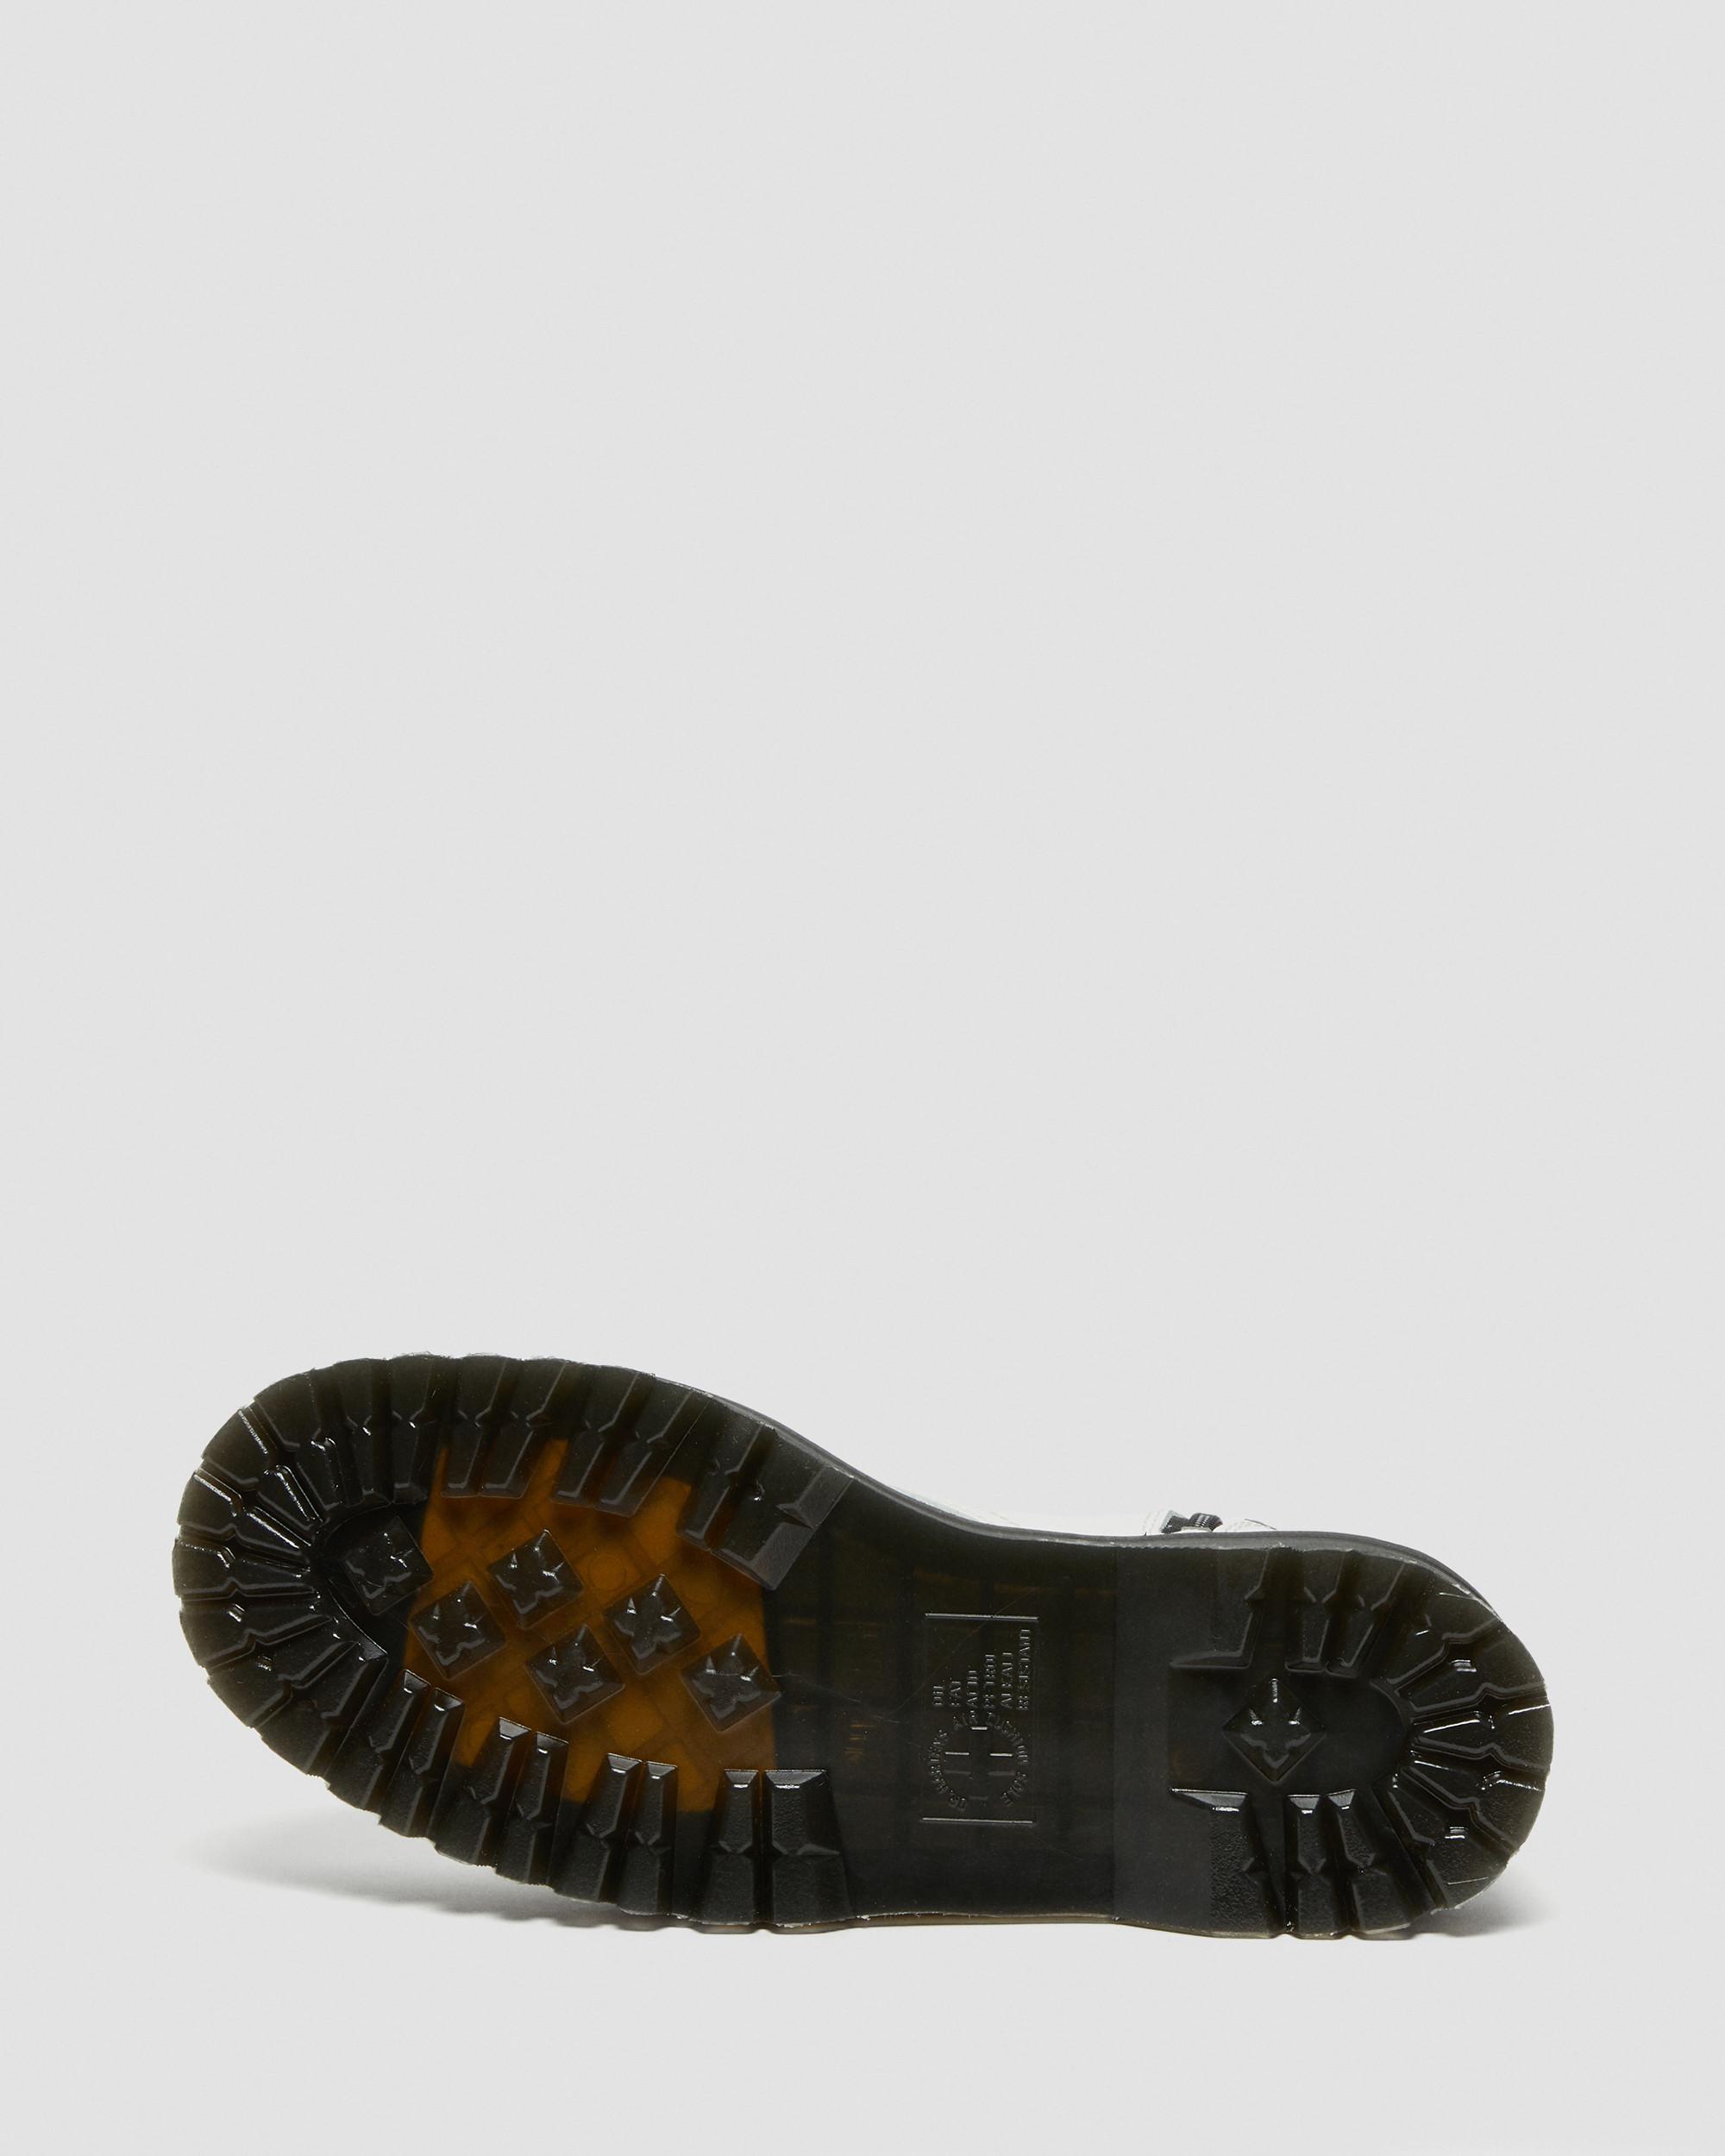 Jadon Boot Smooth Leather Platforms in Black